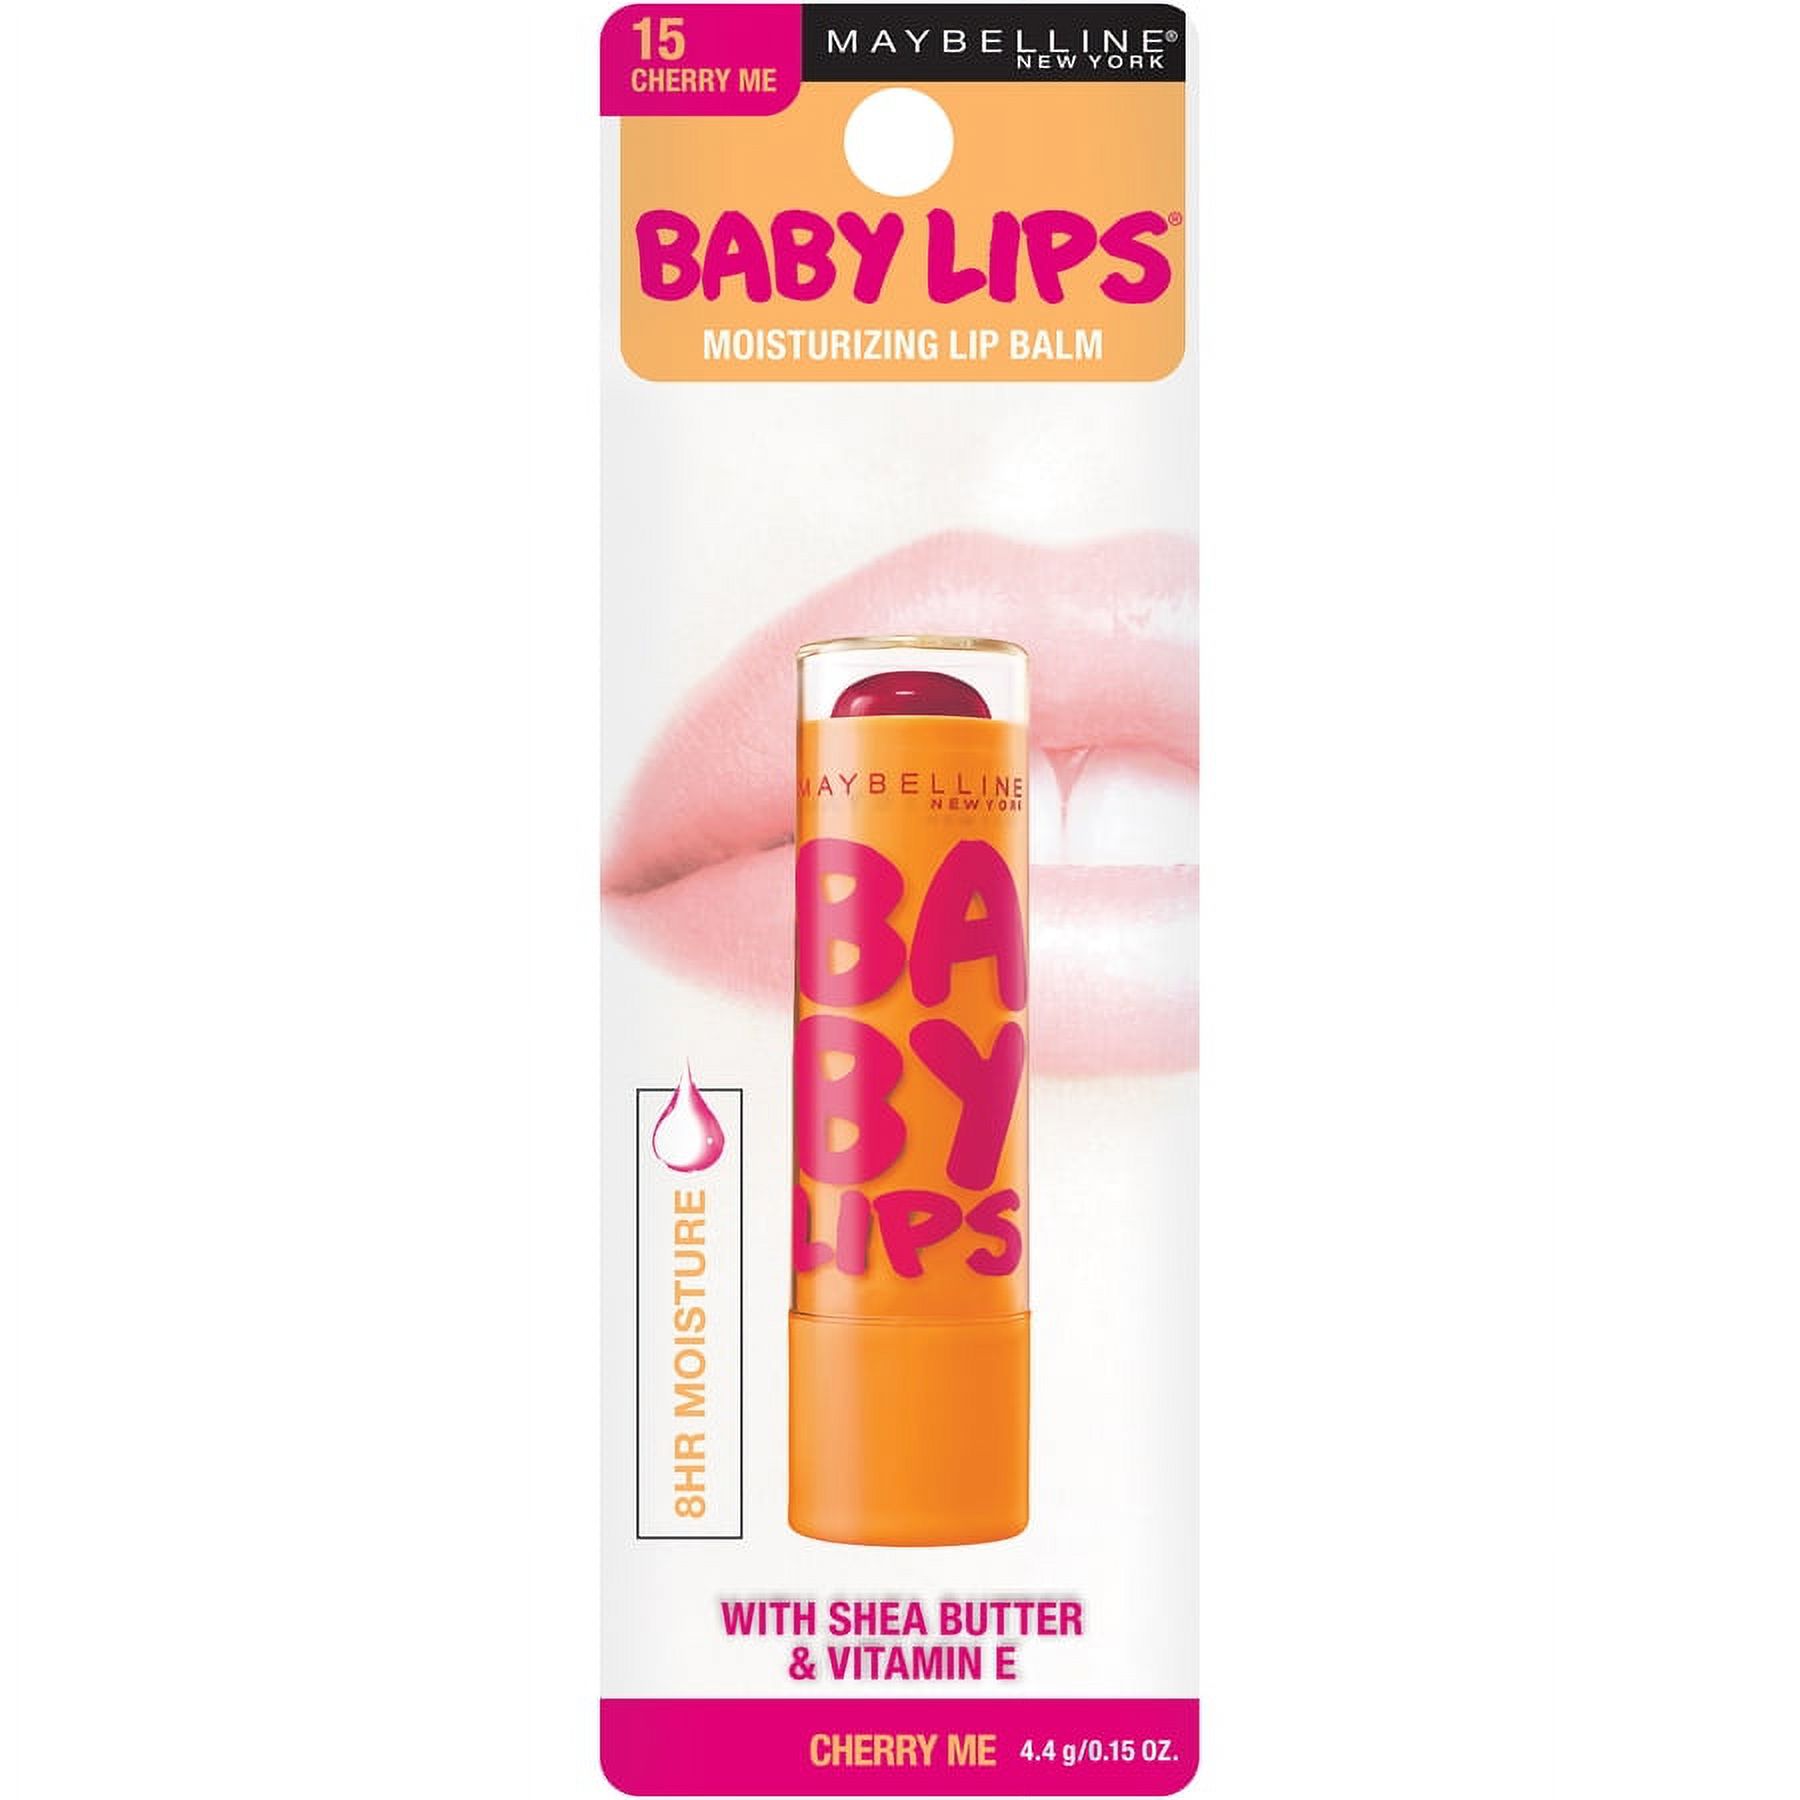 Maybelline Baby Lips Moisturizing Lip Balm, Cherry Me - image 5 of 6